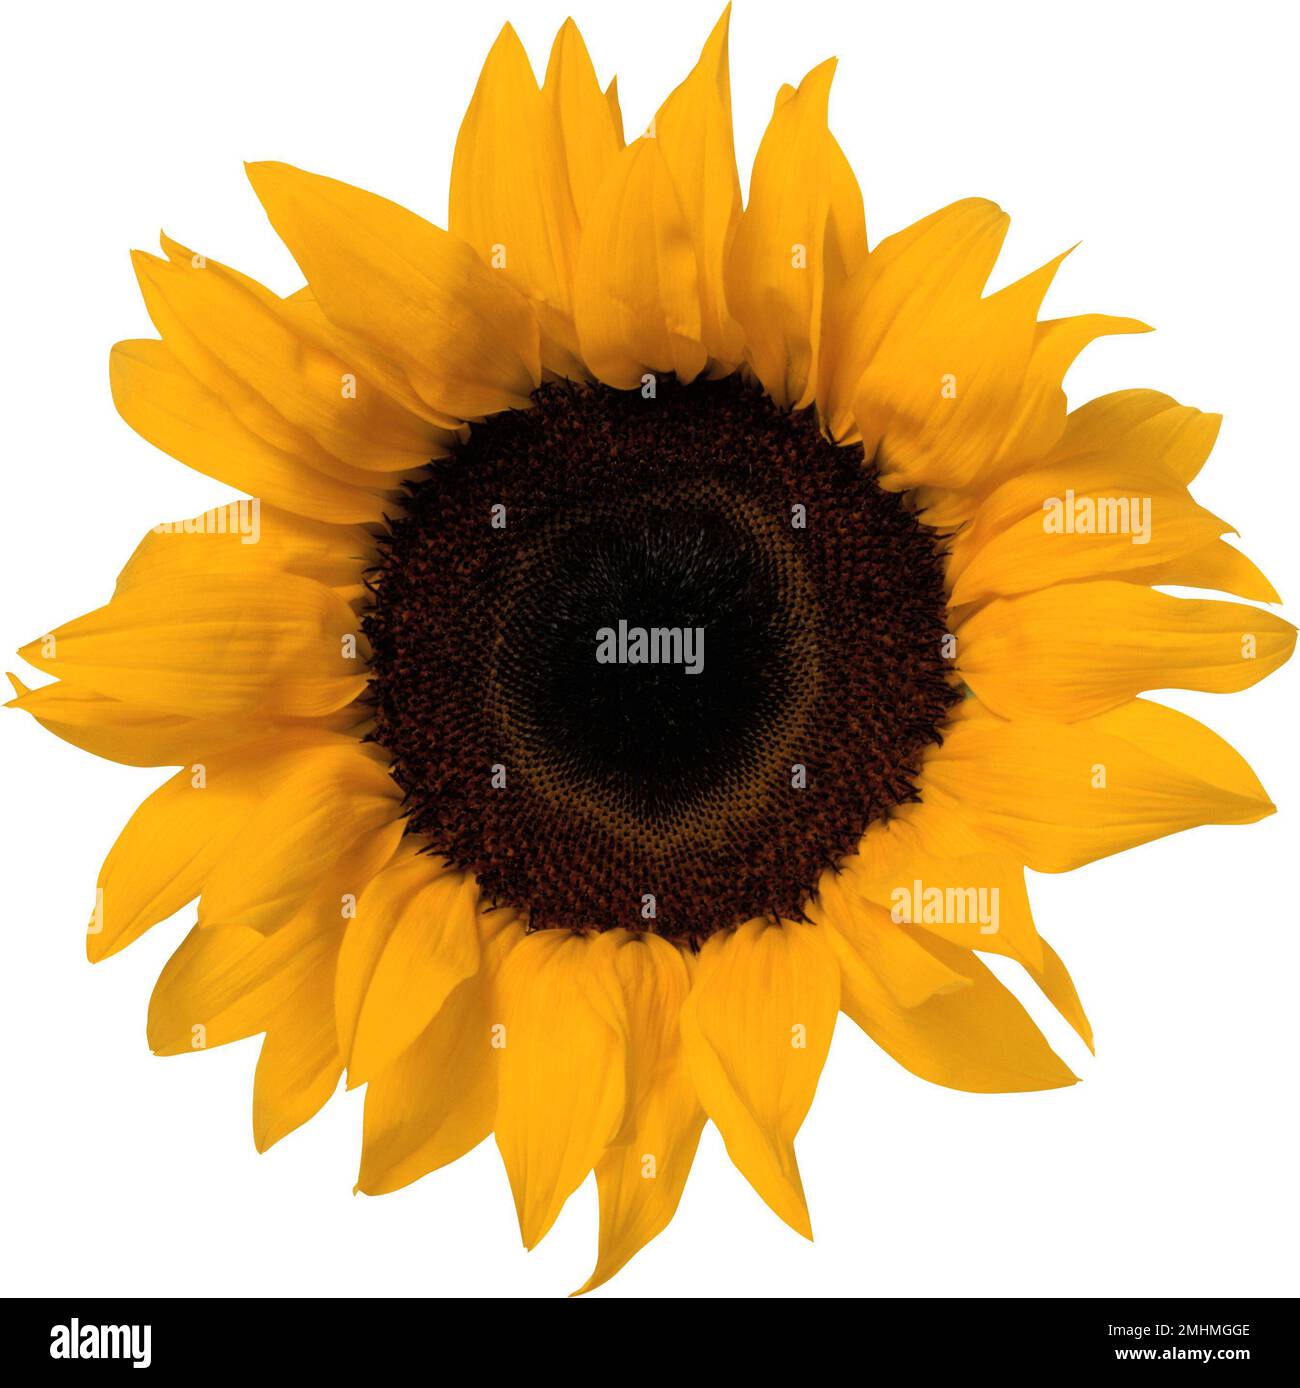 sun flower isolated on white background Stock Photo - Alamy